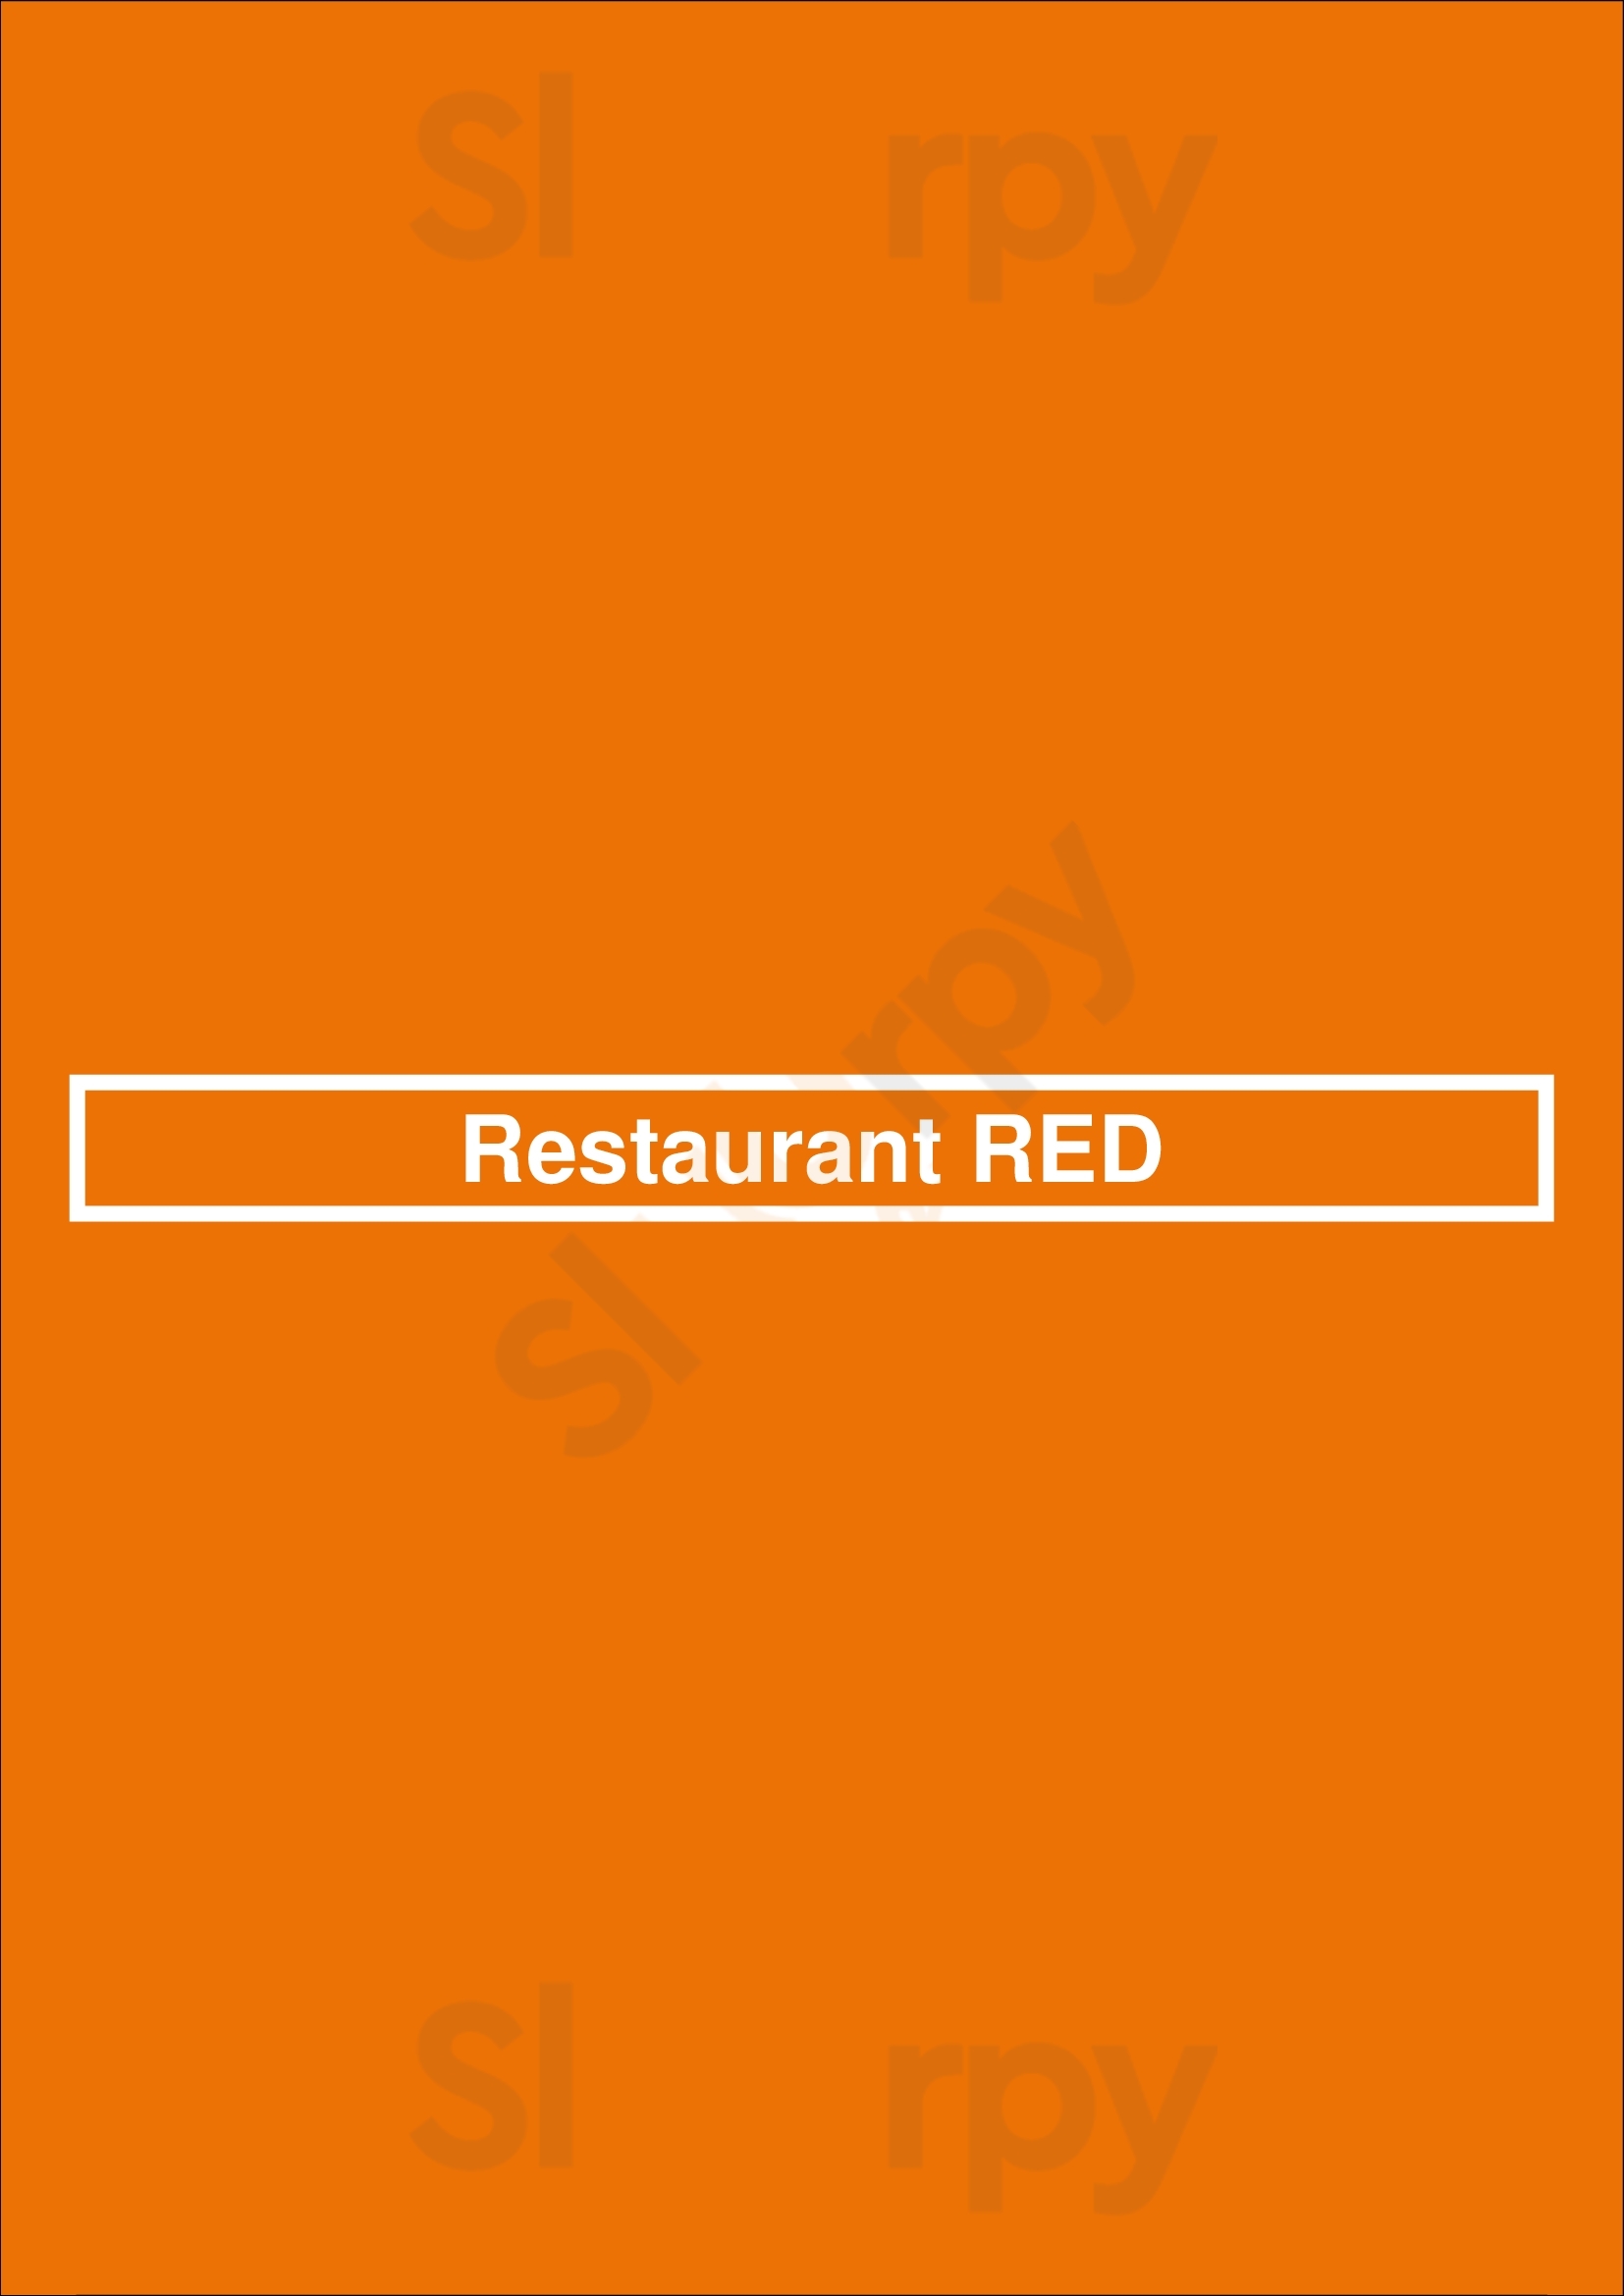 Restaurant Red Amsterdam Menu - 1